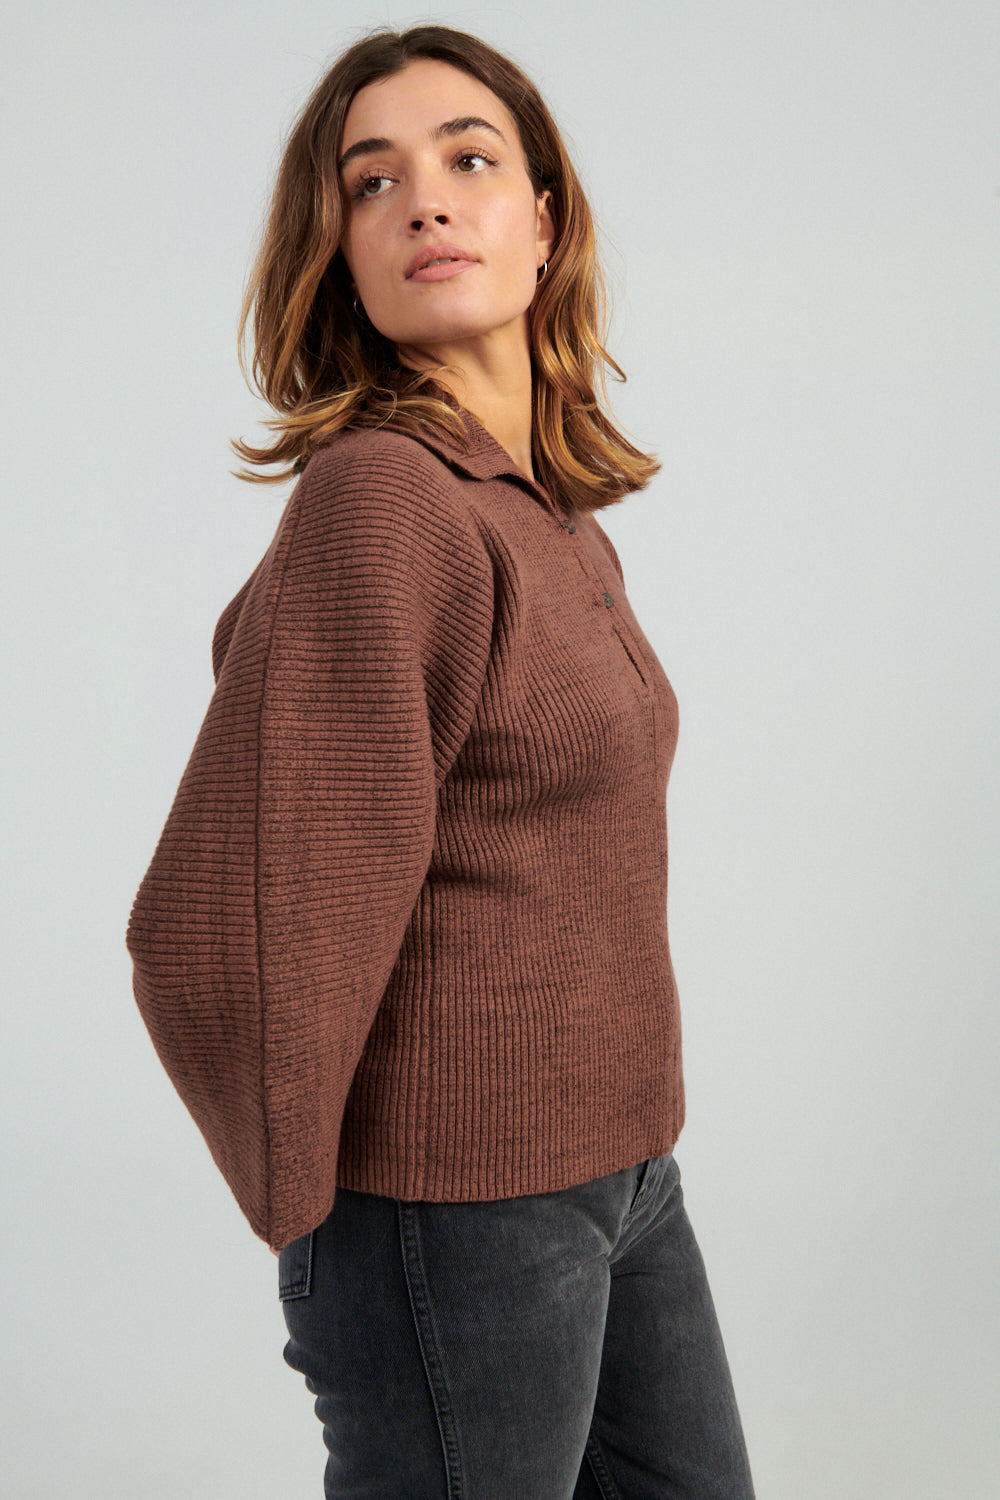 Mara Hoffman Ama Sweater brown-Idun-St. Paul